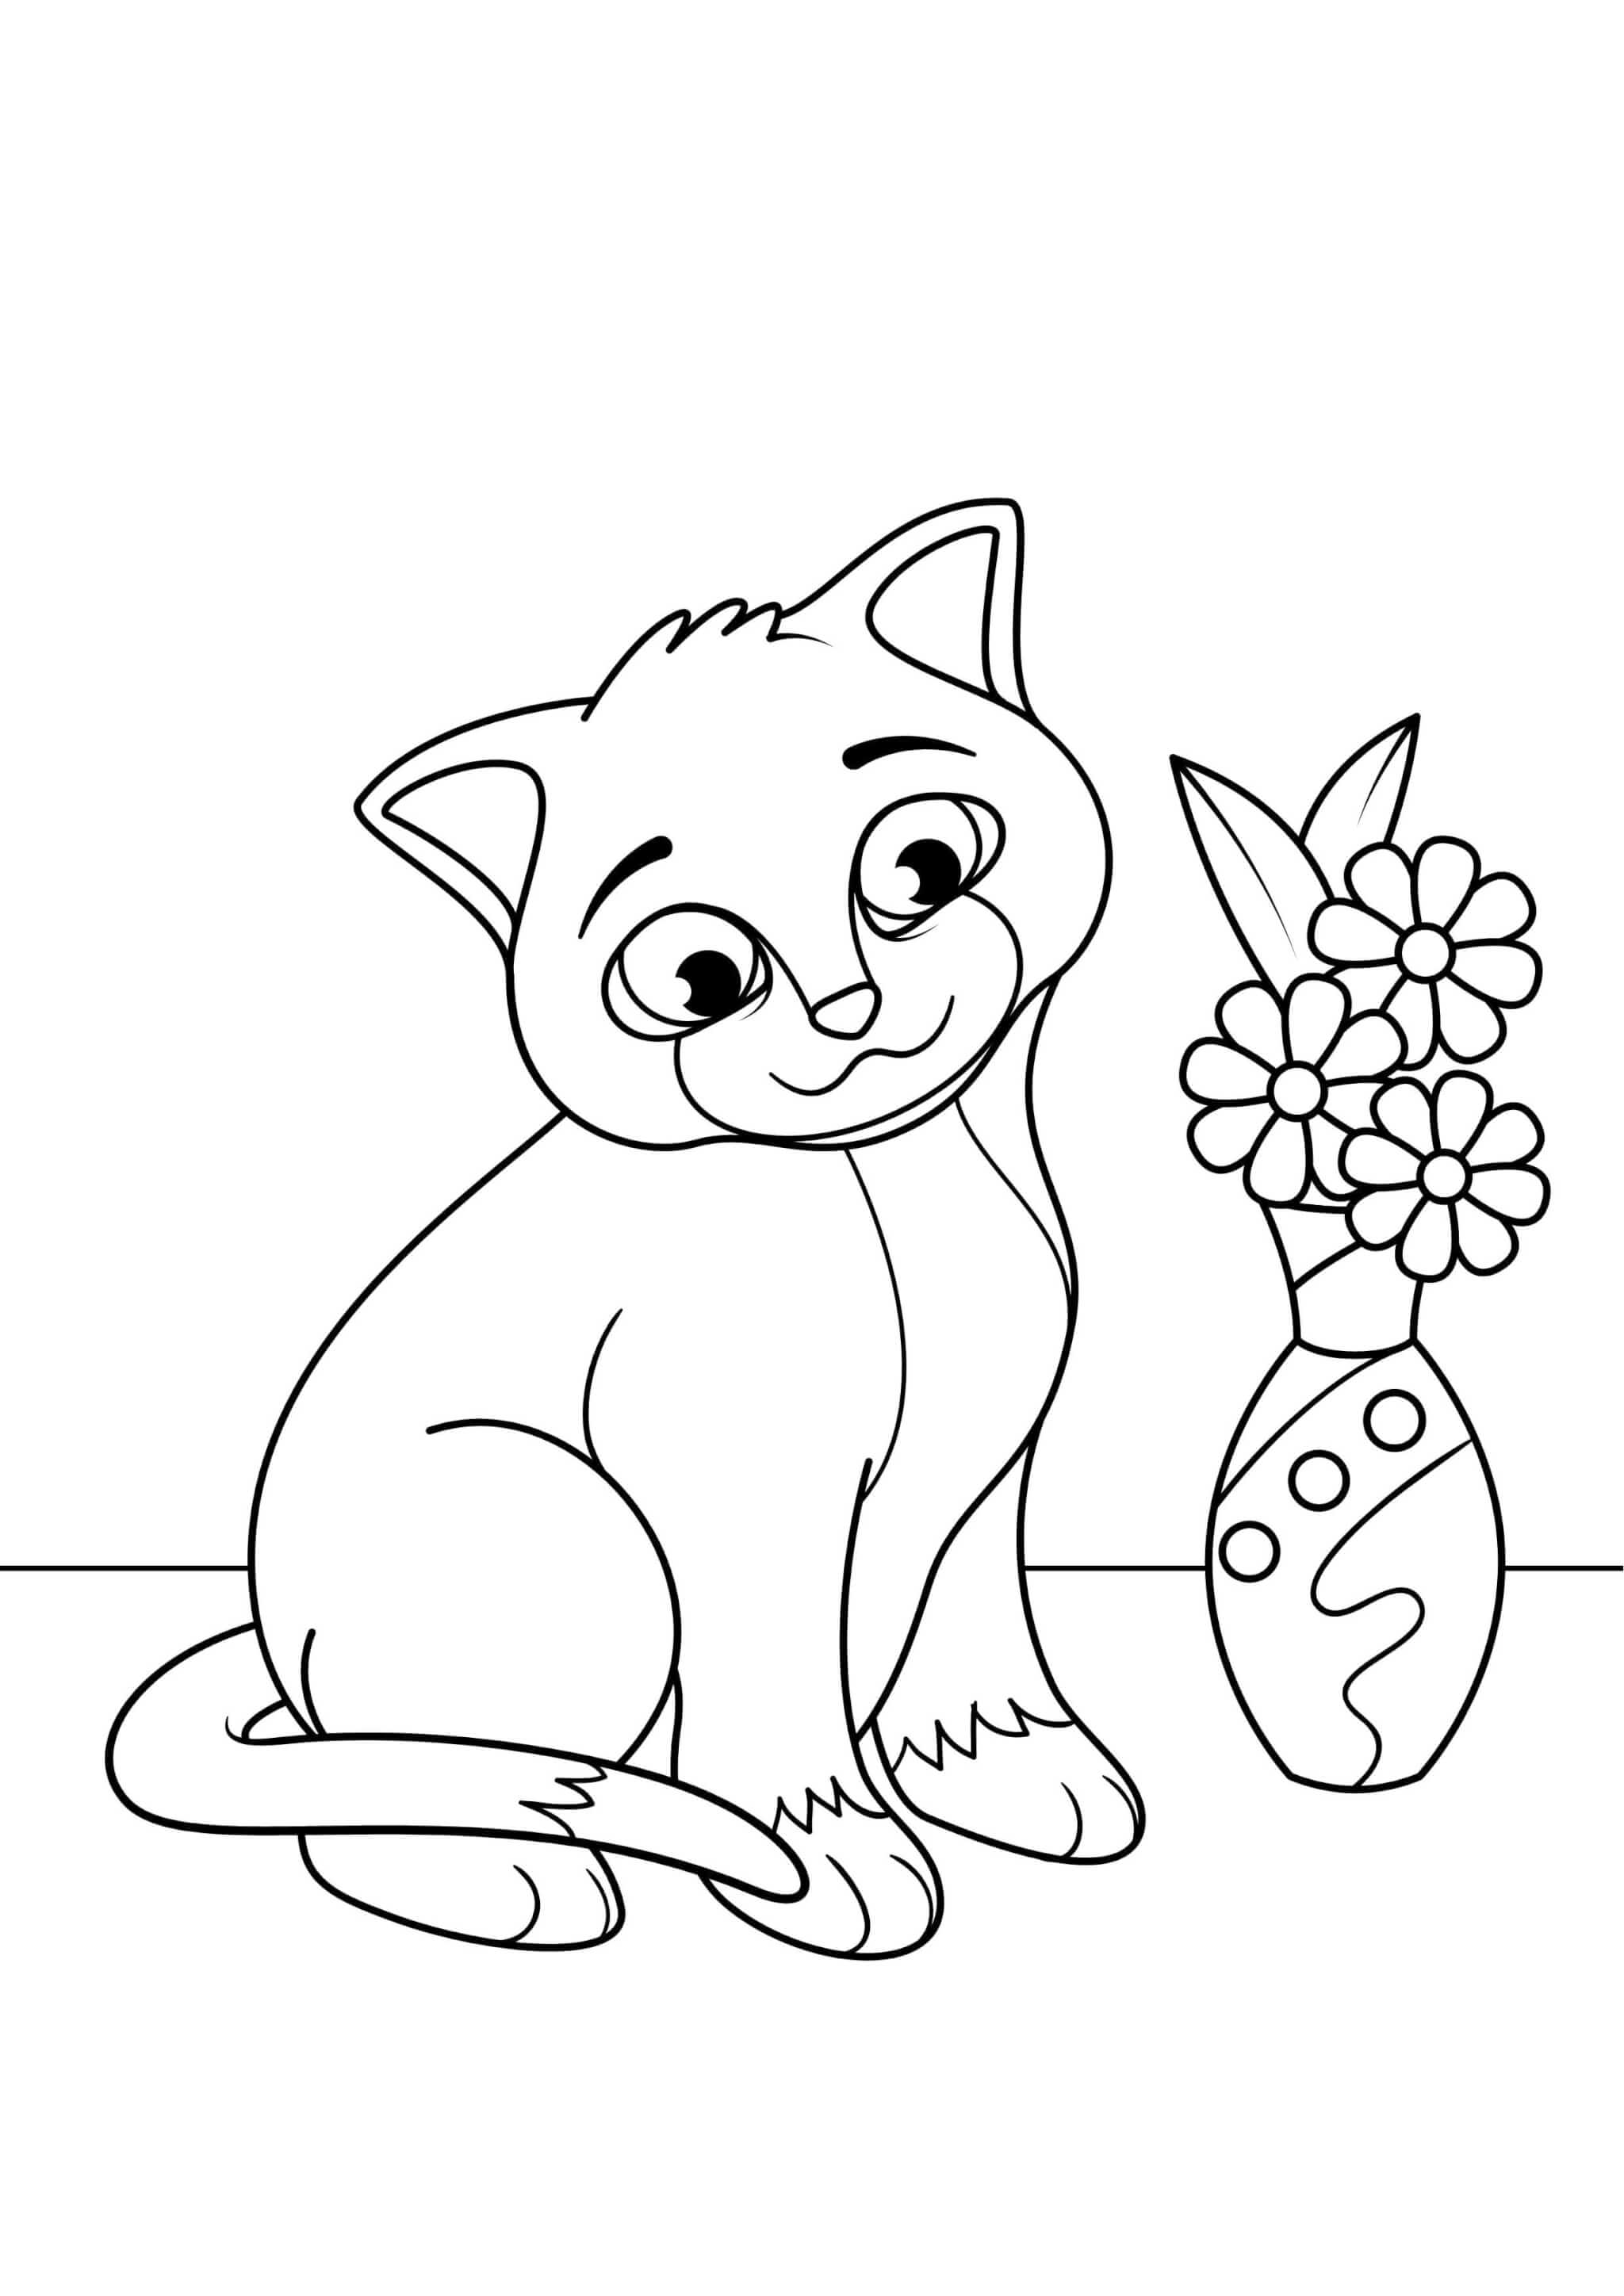 Раскраска Котёнок и цветочки